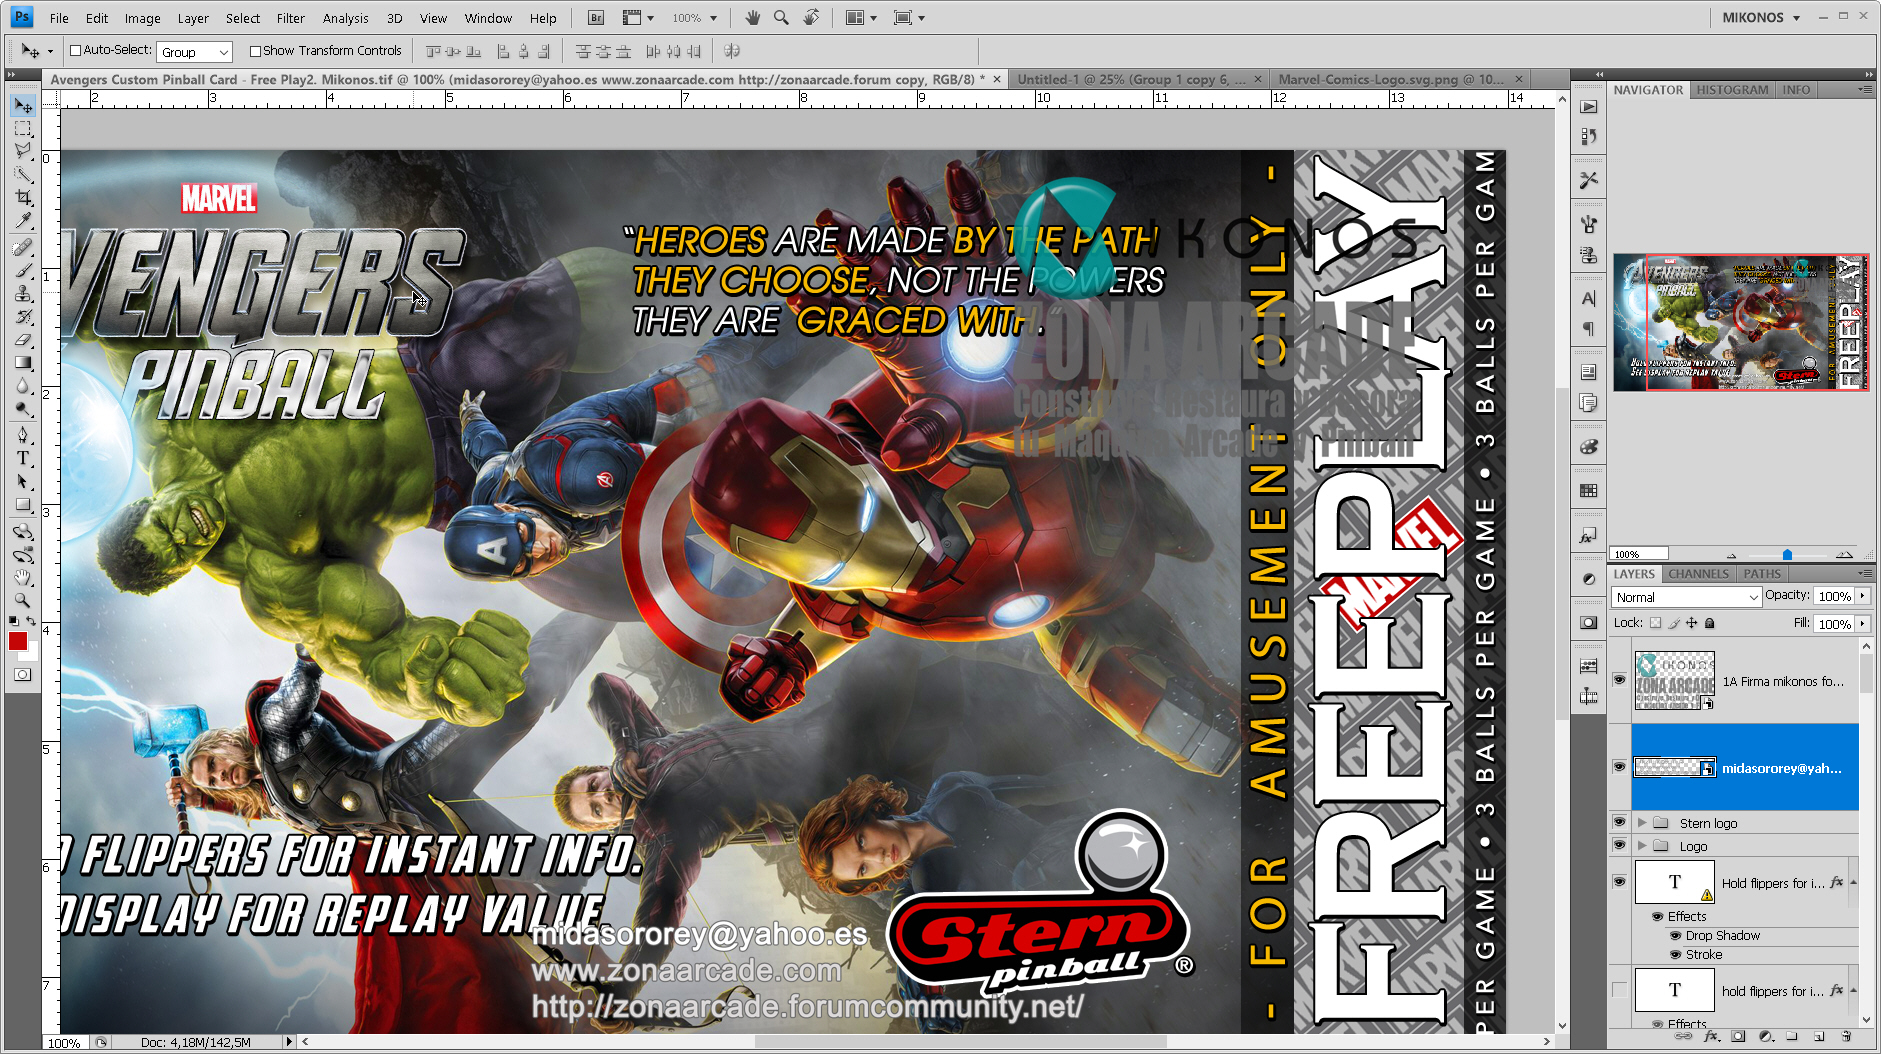 The Avengers Custom Pinball Card - Free Play.%20Mikonos2